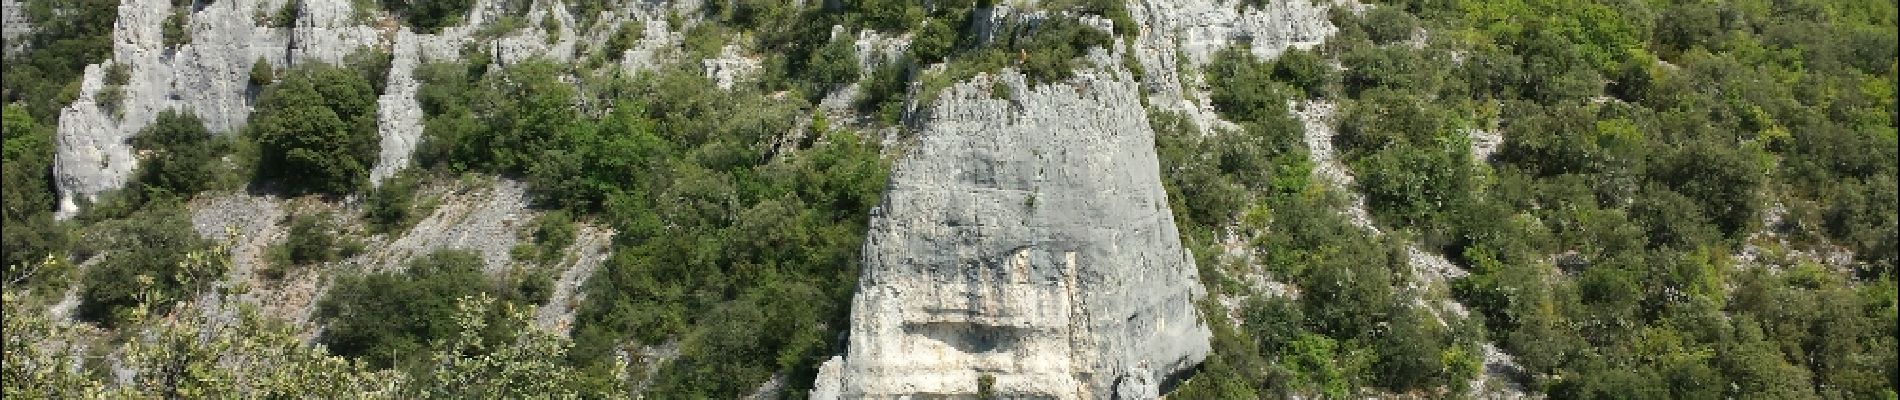 Tour Wandern Oppedette - Gorges d'Oppedette 150831 - Photo